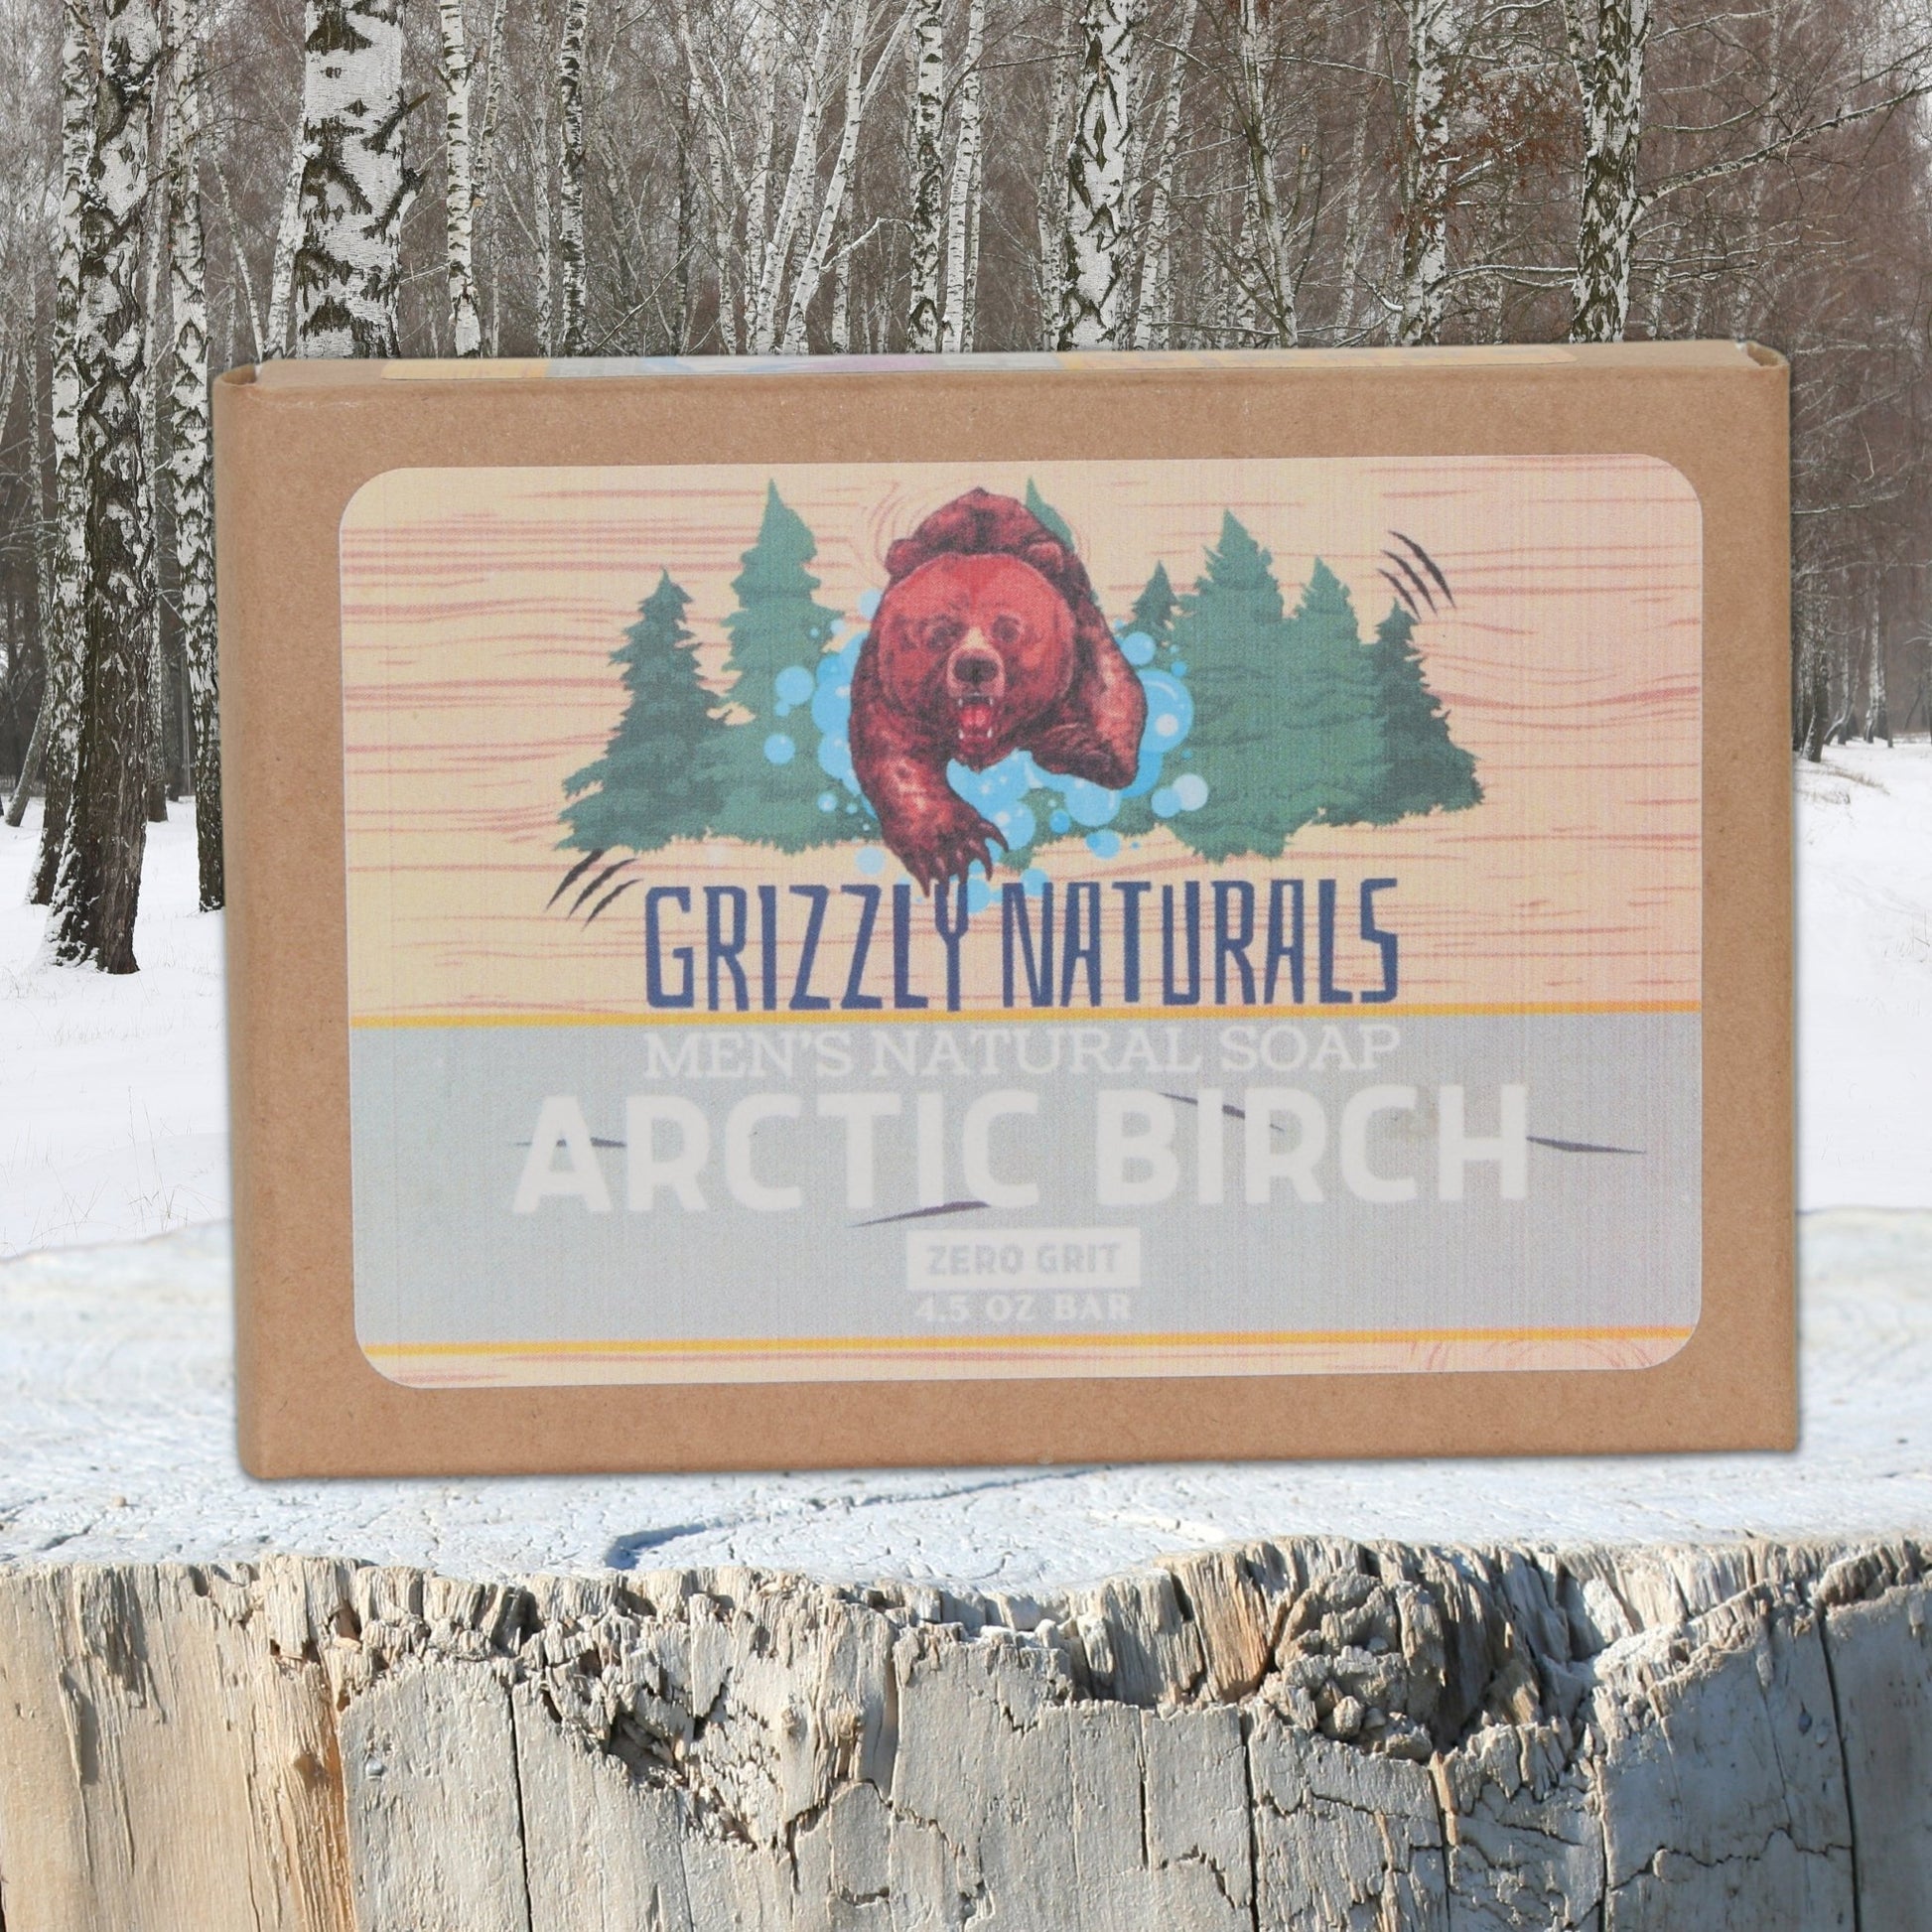 Arctic Birch - BAR SOAP - Zero Grit - Grizzly Naturals Soap Company